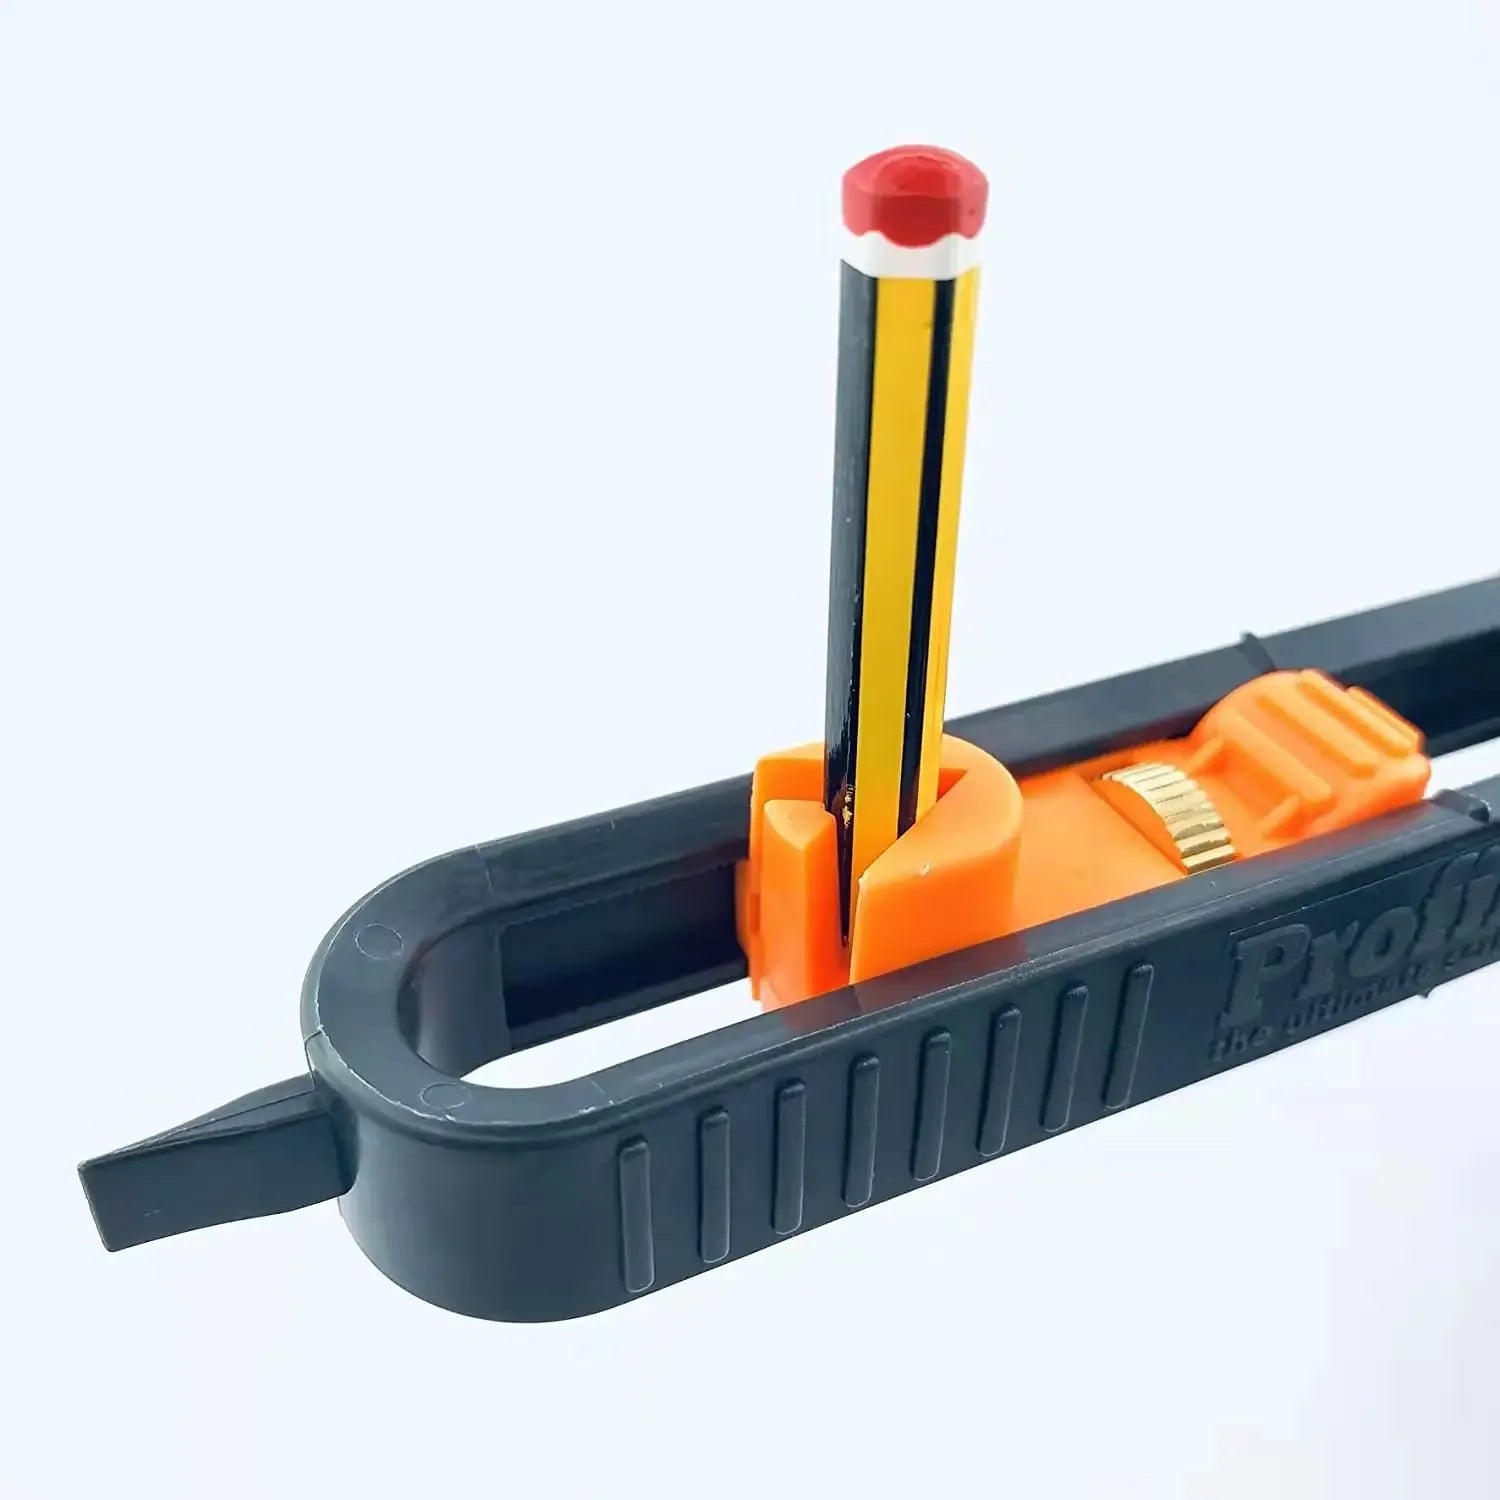 Scribing Tool - Woodworking Gauge Set Profile Scribing Ruler Contour with Lock Adjustable